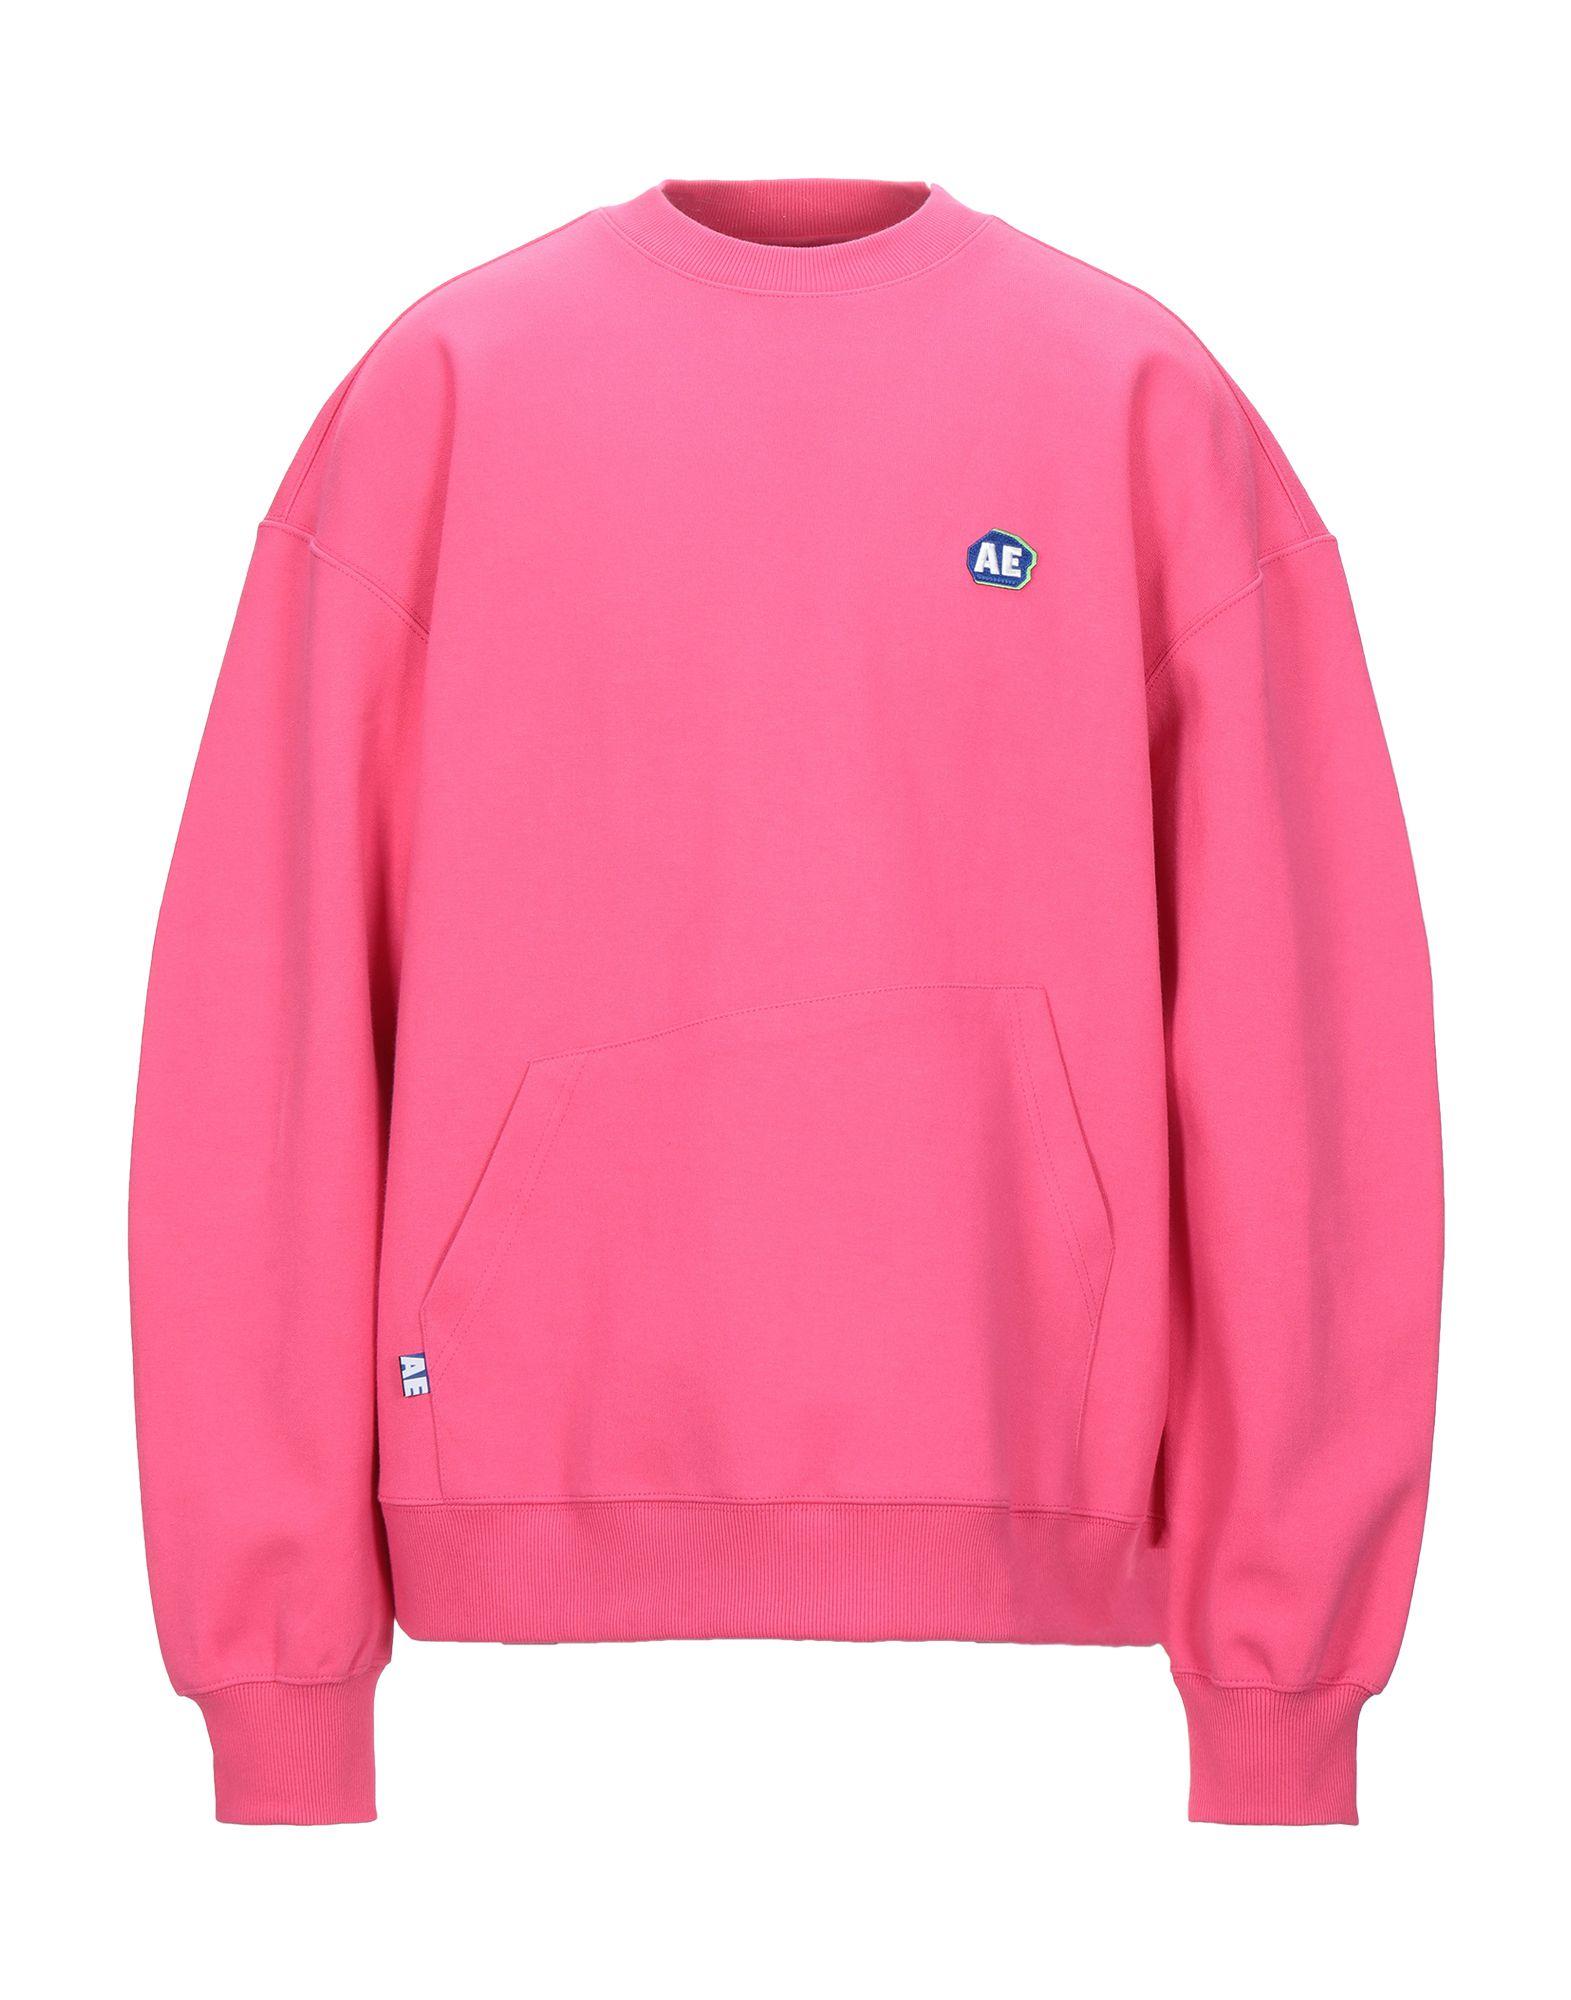 ADER error Sweatshirt in Fuchsia (Pink) for Men - Lyst